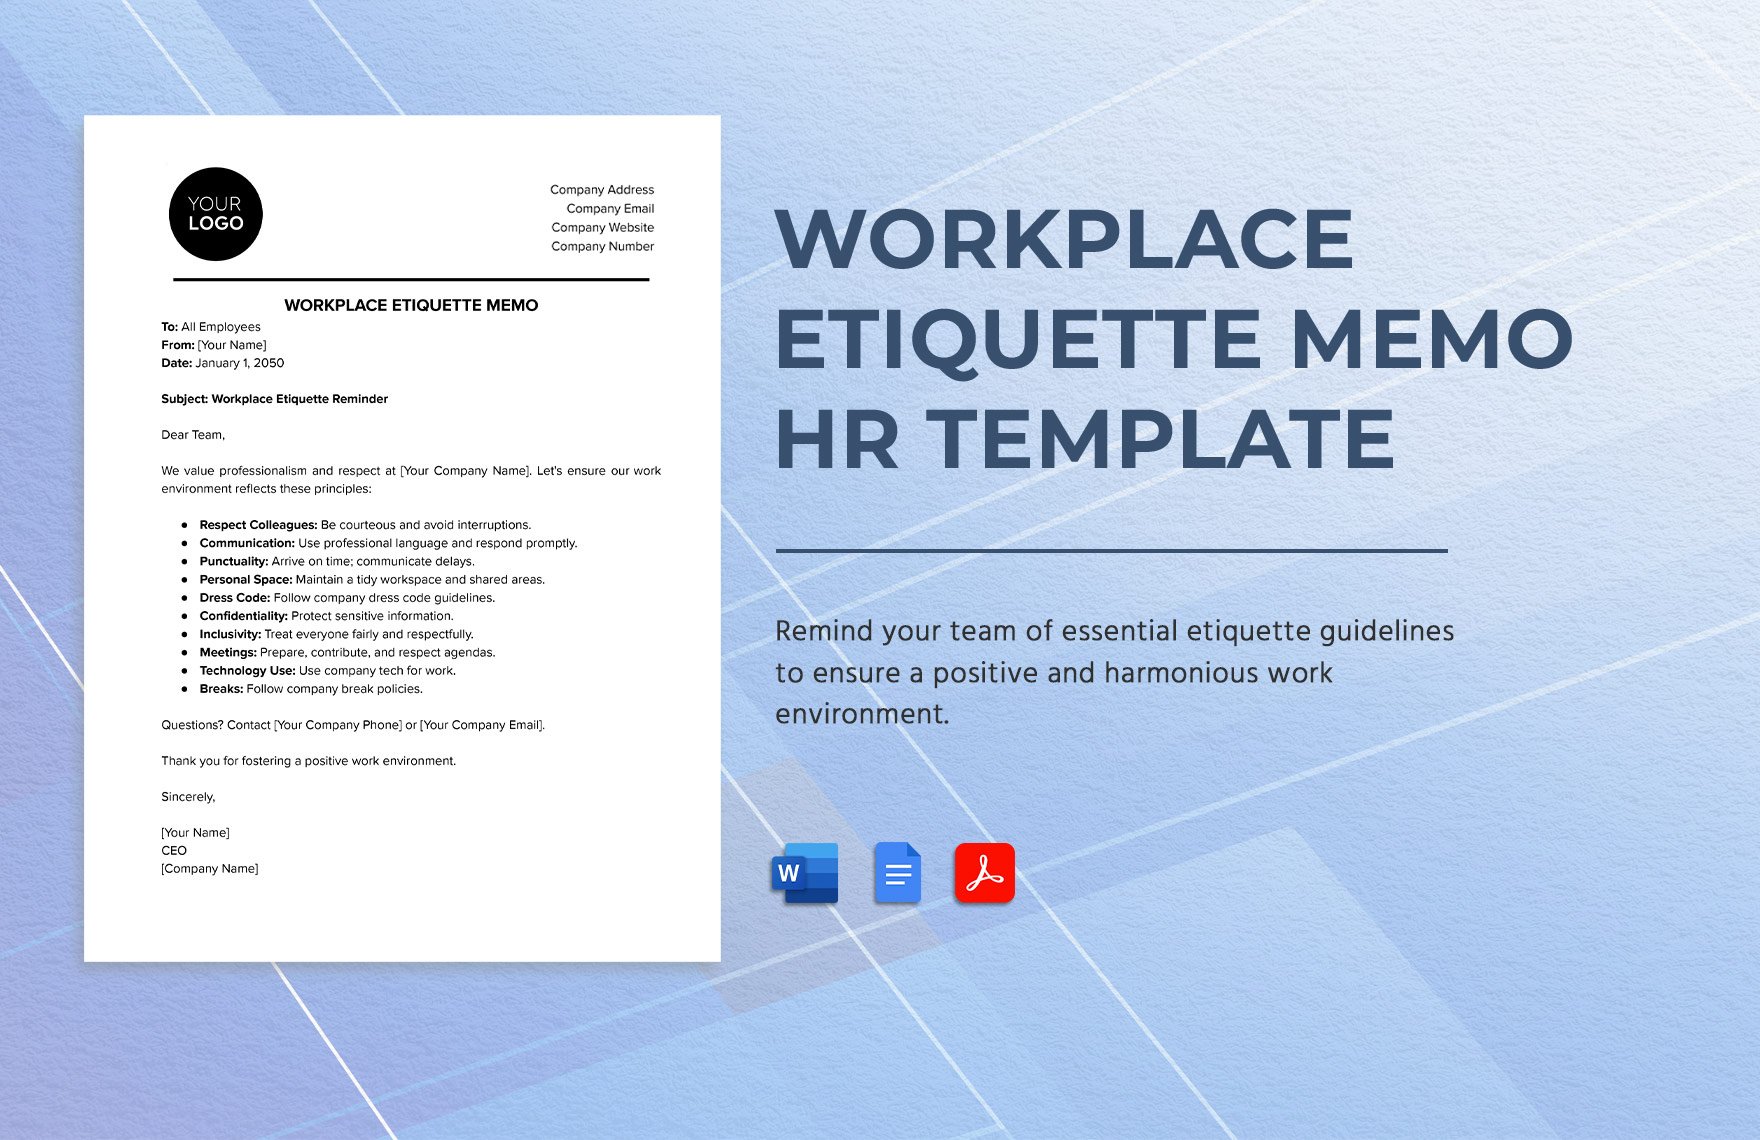 Workplace Etiquette Memo HR Template